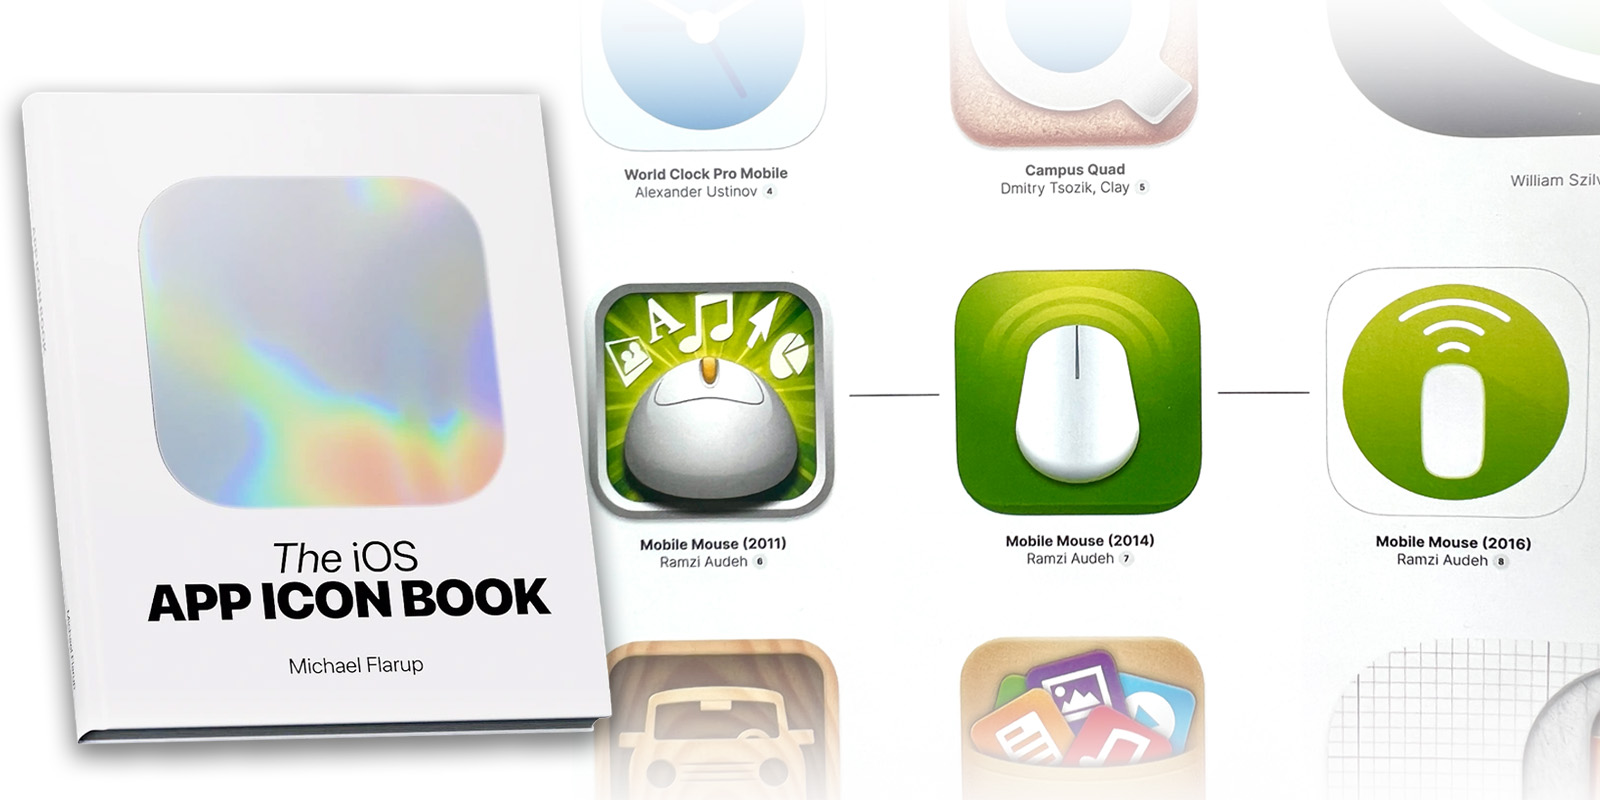 The iOS App Icon Book Flarup